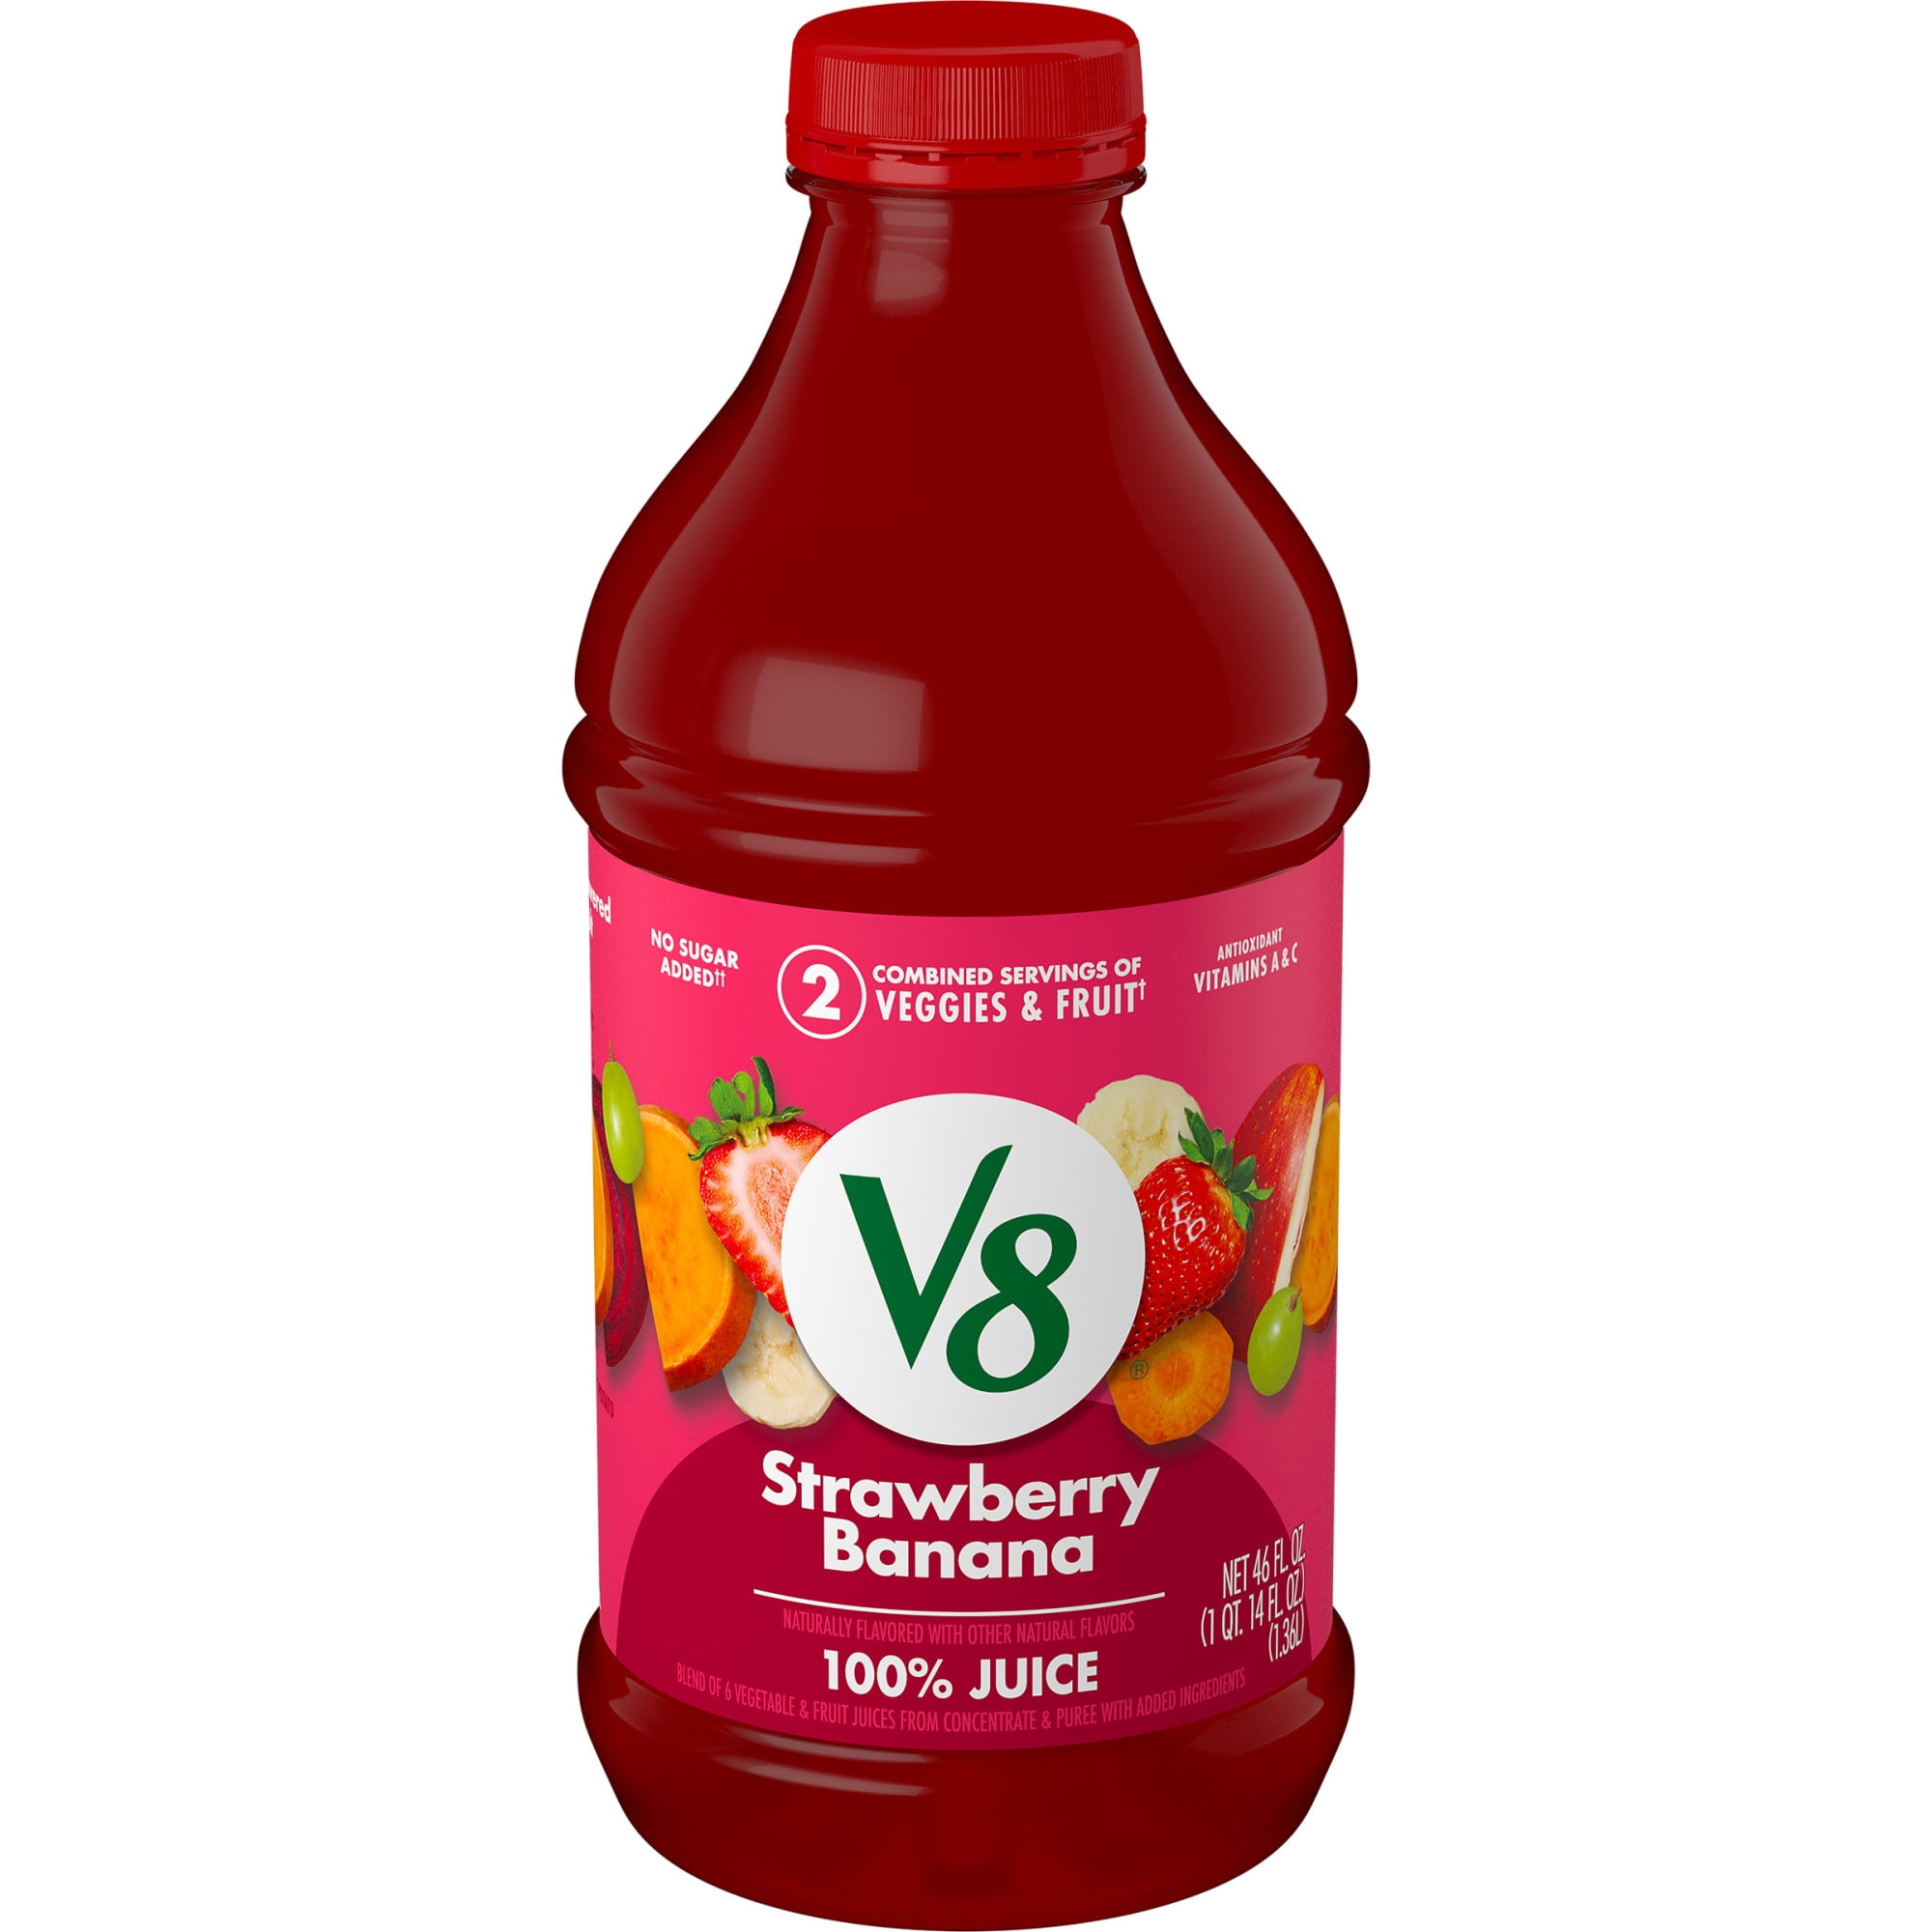 V8 Blends 100% Juice Strawberry Banana Juice, 46 Fl Oz Bottle